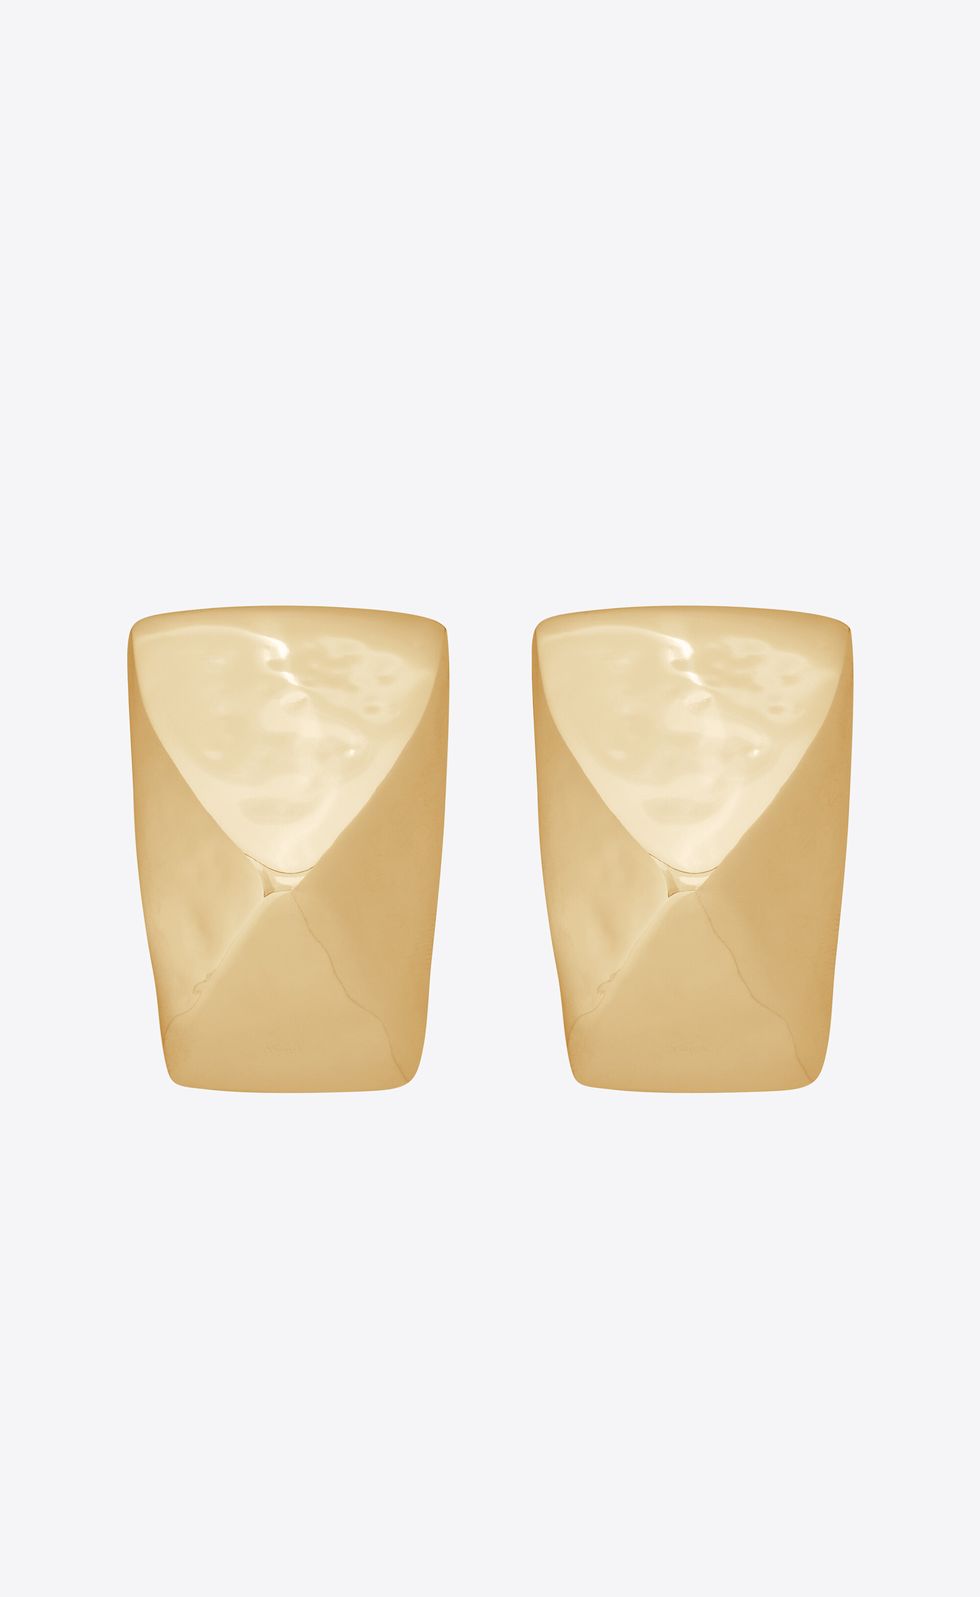 Pyramid Earrings in 18k Yellow Gold